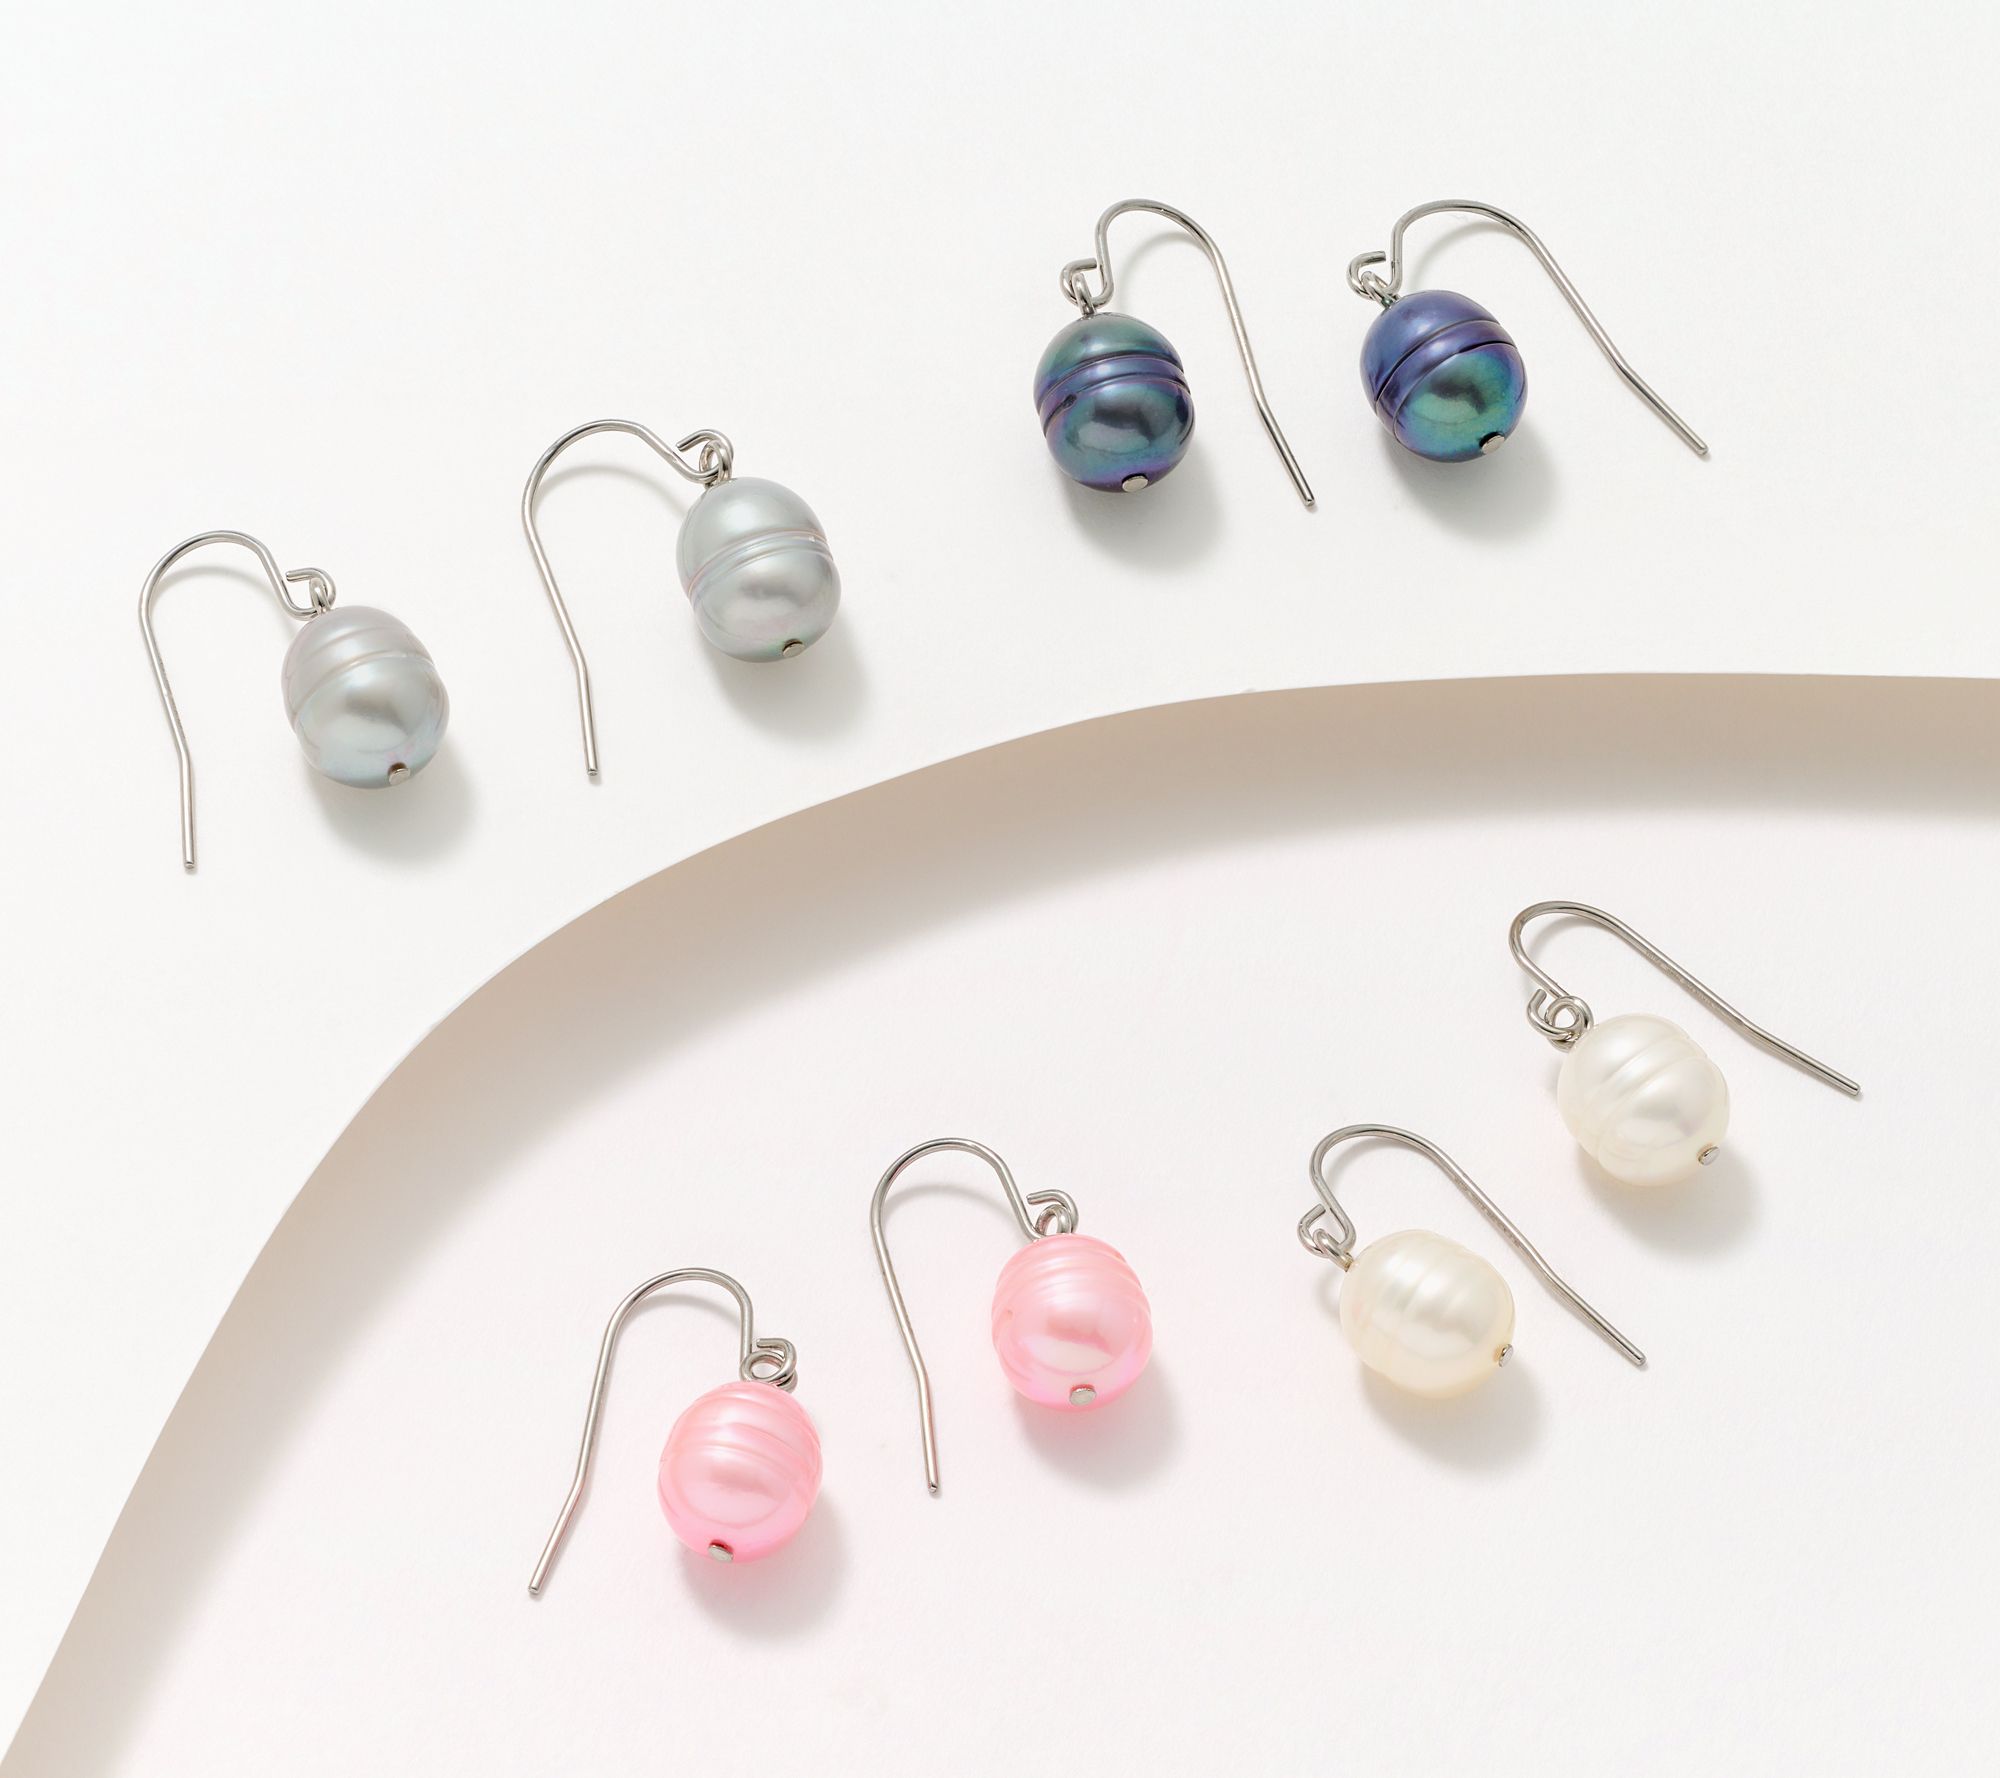 Travel Earring Organizer - Foter  Diy jewelry display, Recycled earrings,  Earring storage